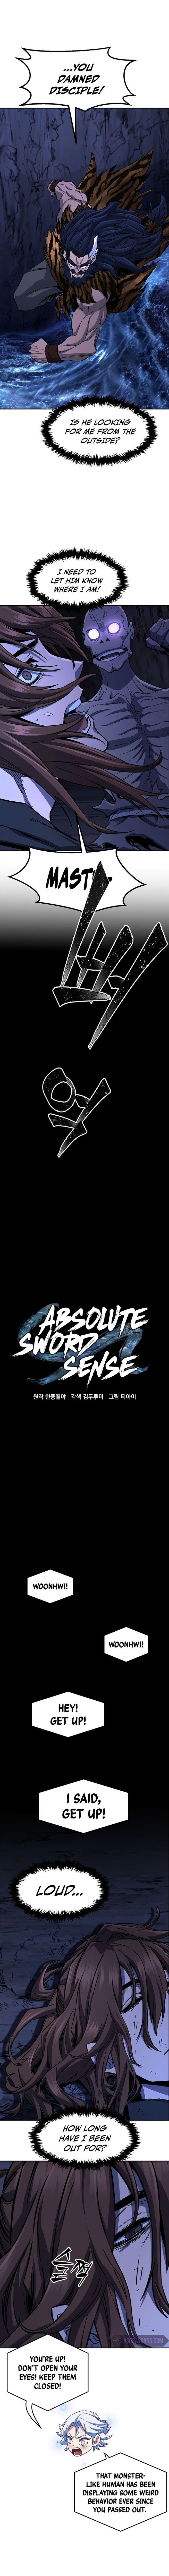 Absolute Sword Sense 49 4